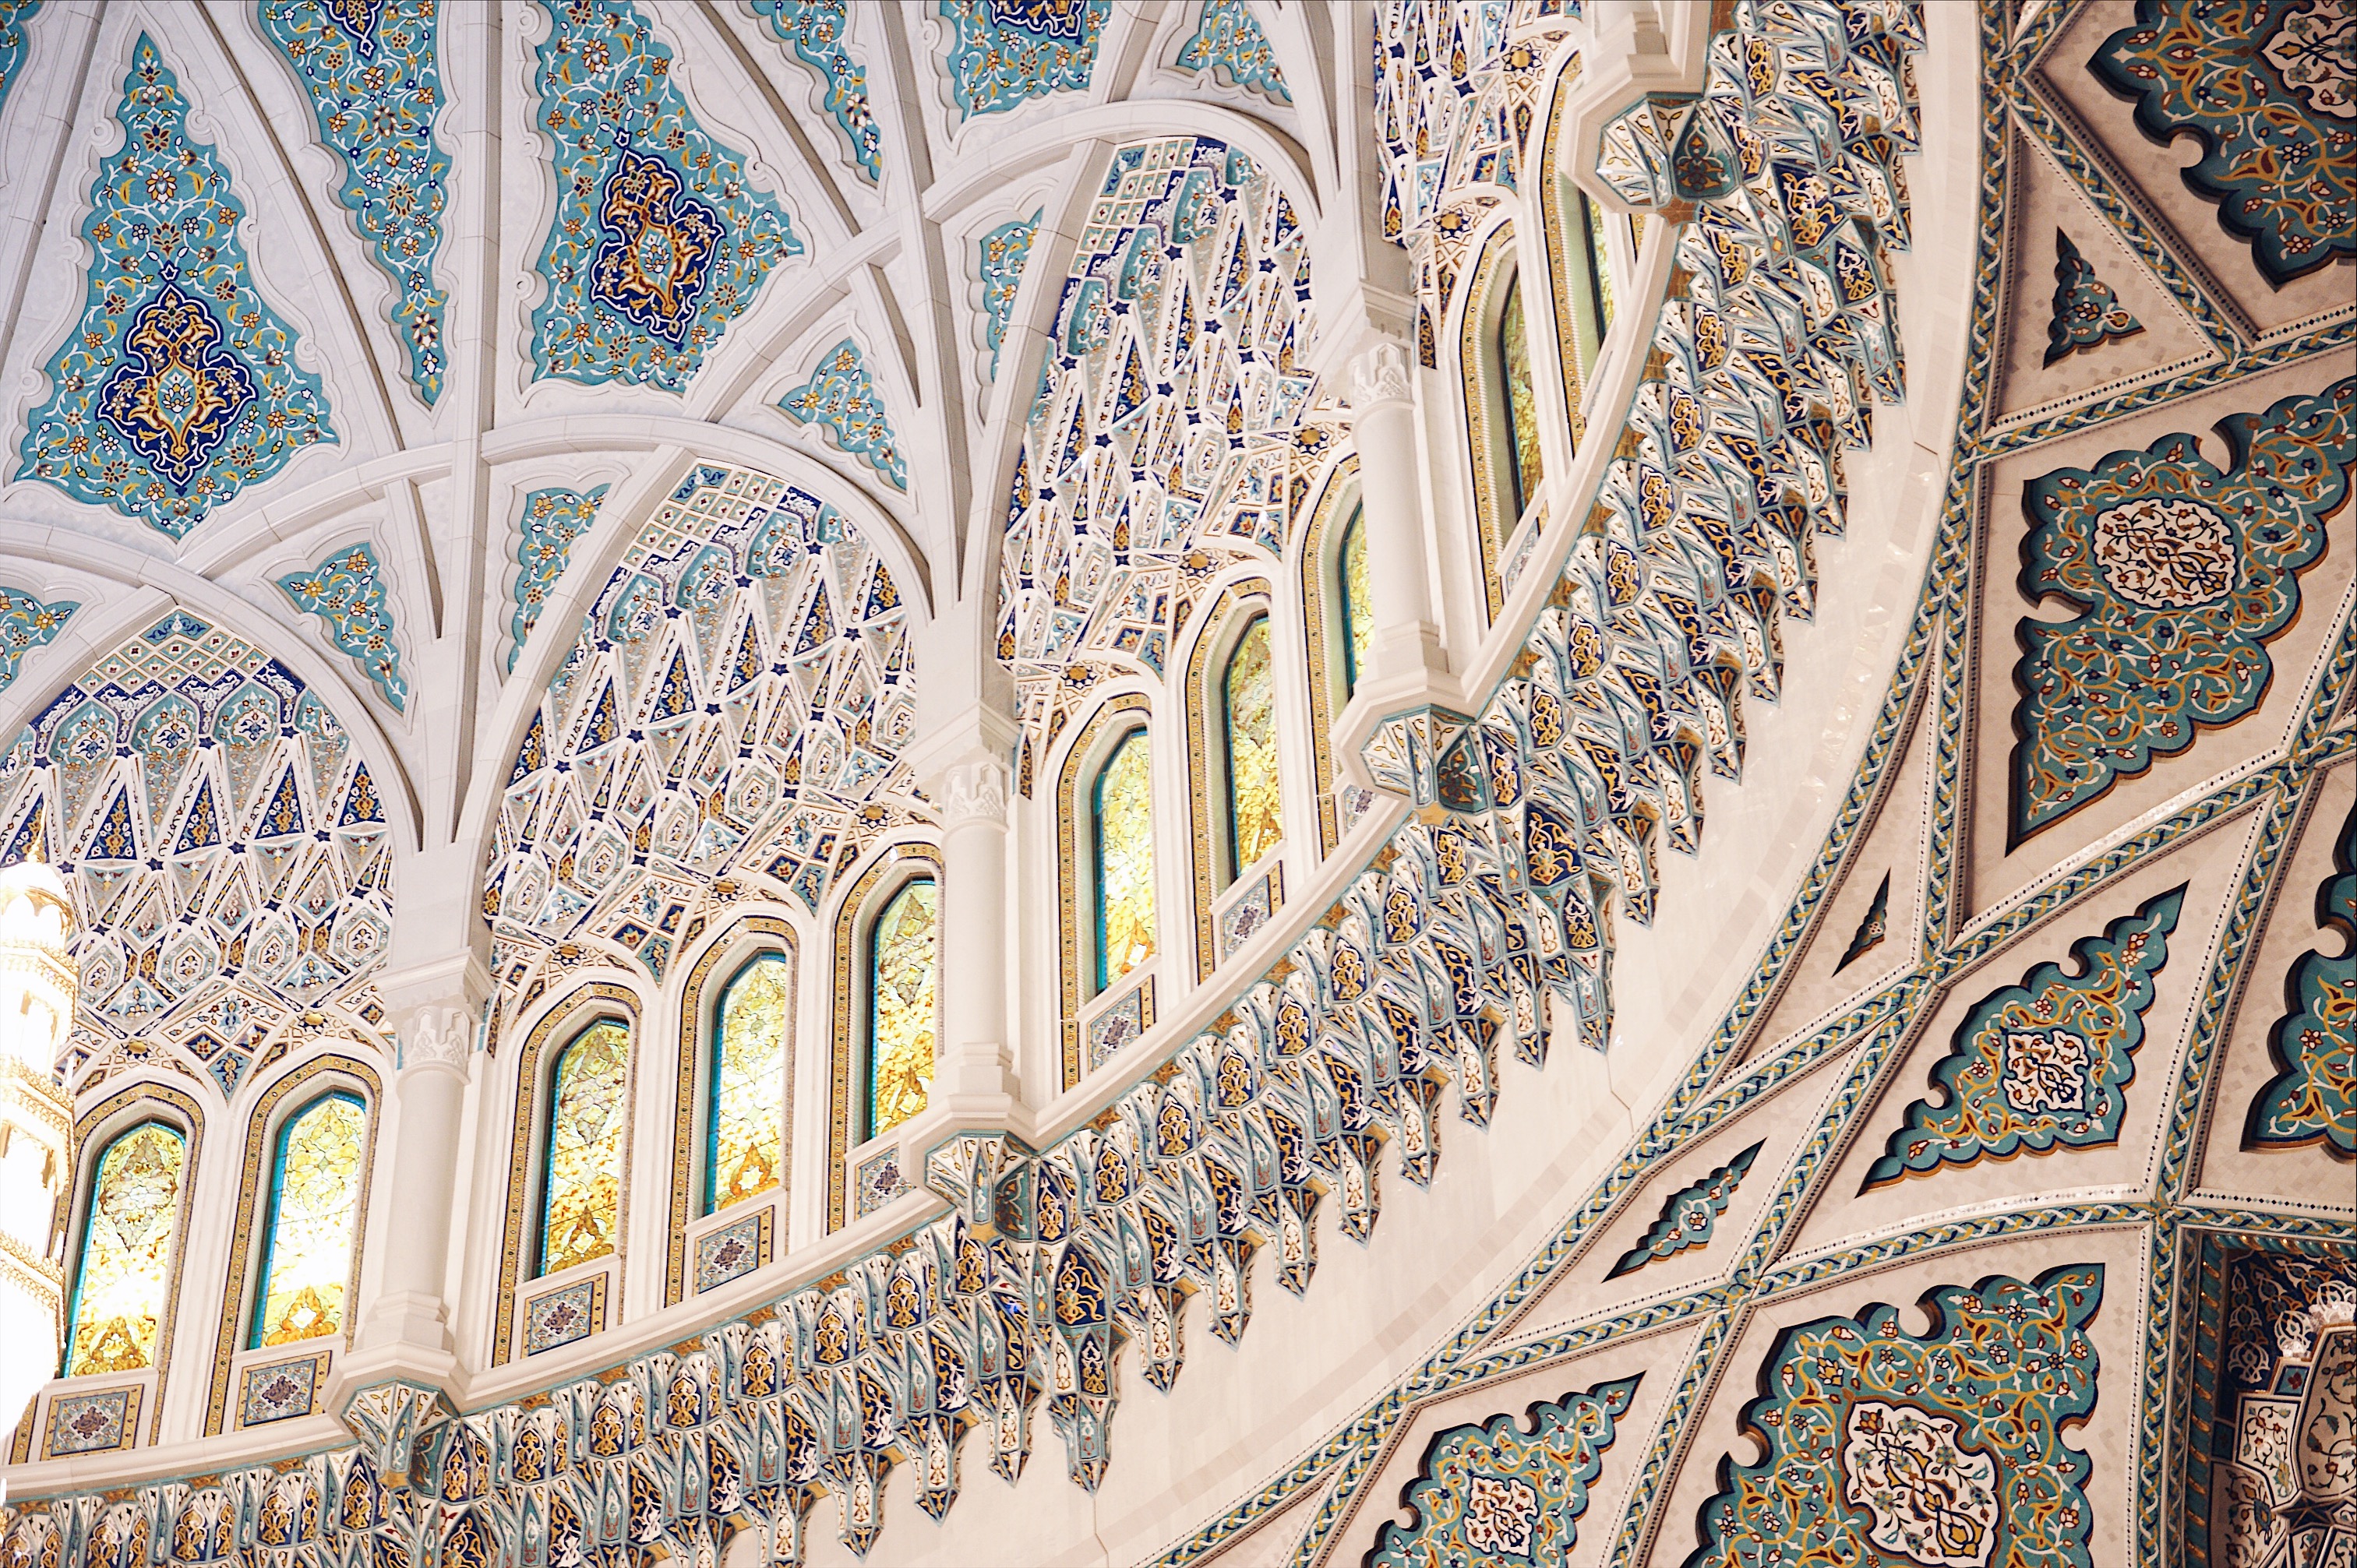 Muscat Große Sultan Quabus Moschee